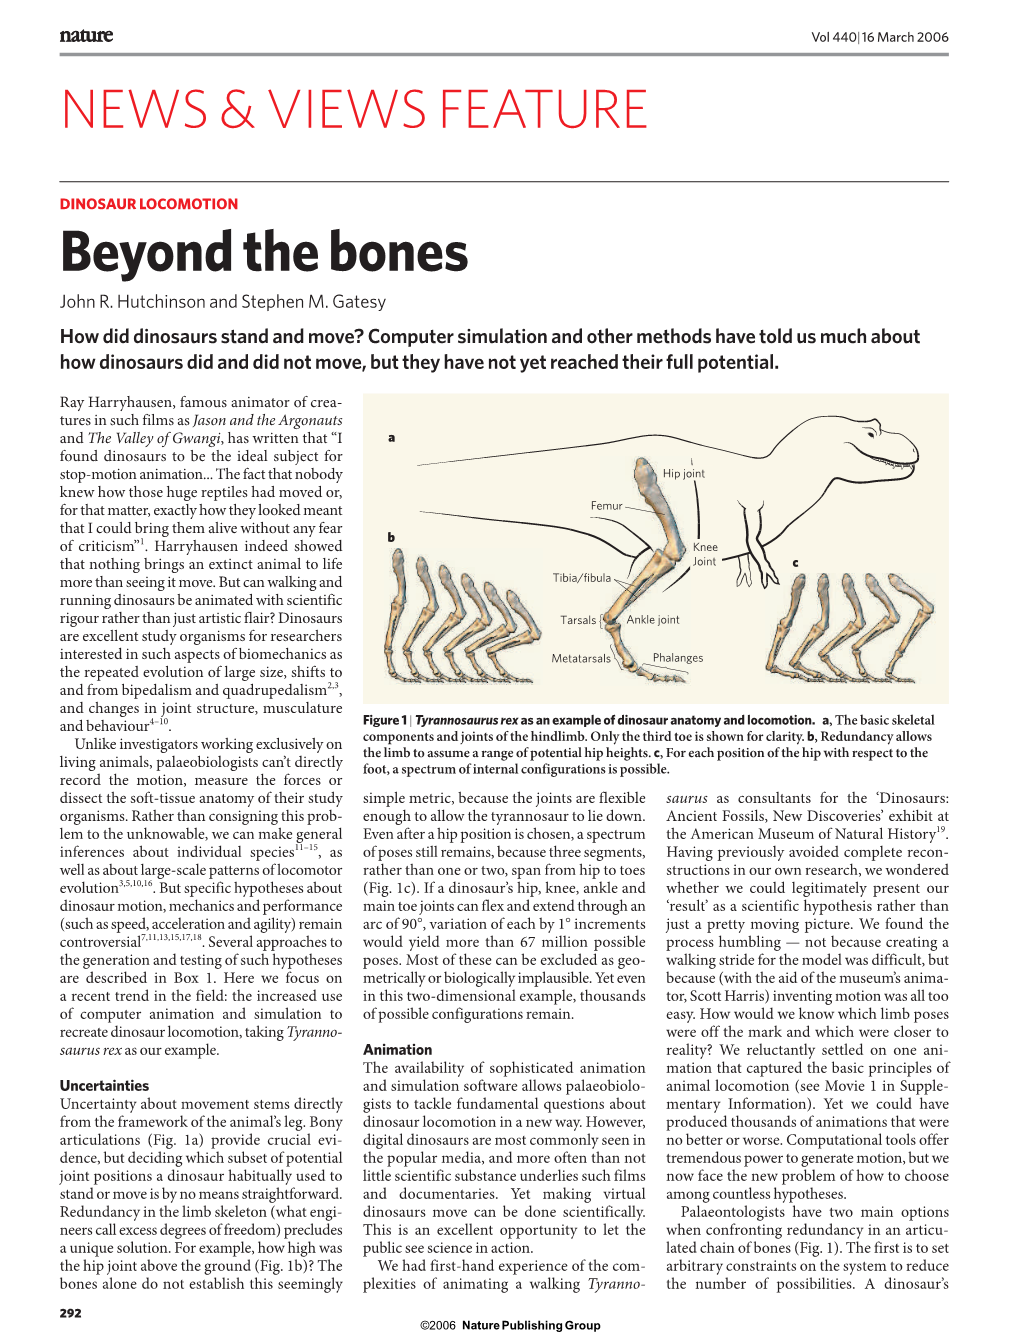 Dinosaur Locomotion: Beyond the Bones (PDF)